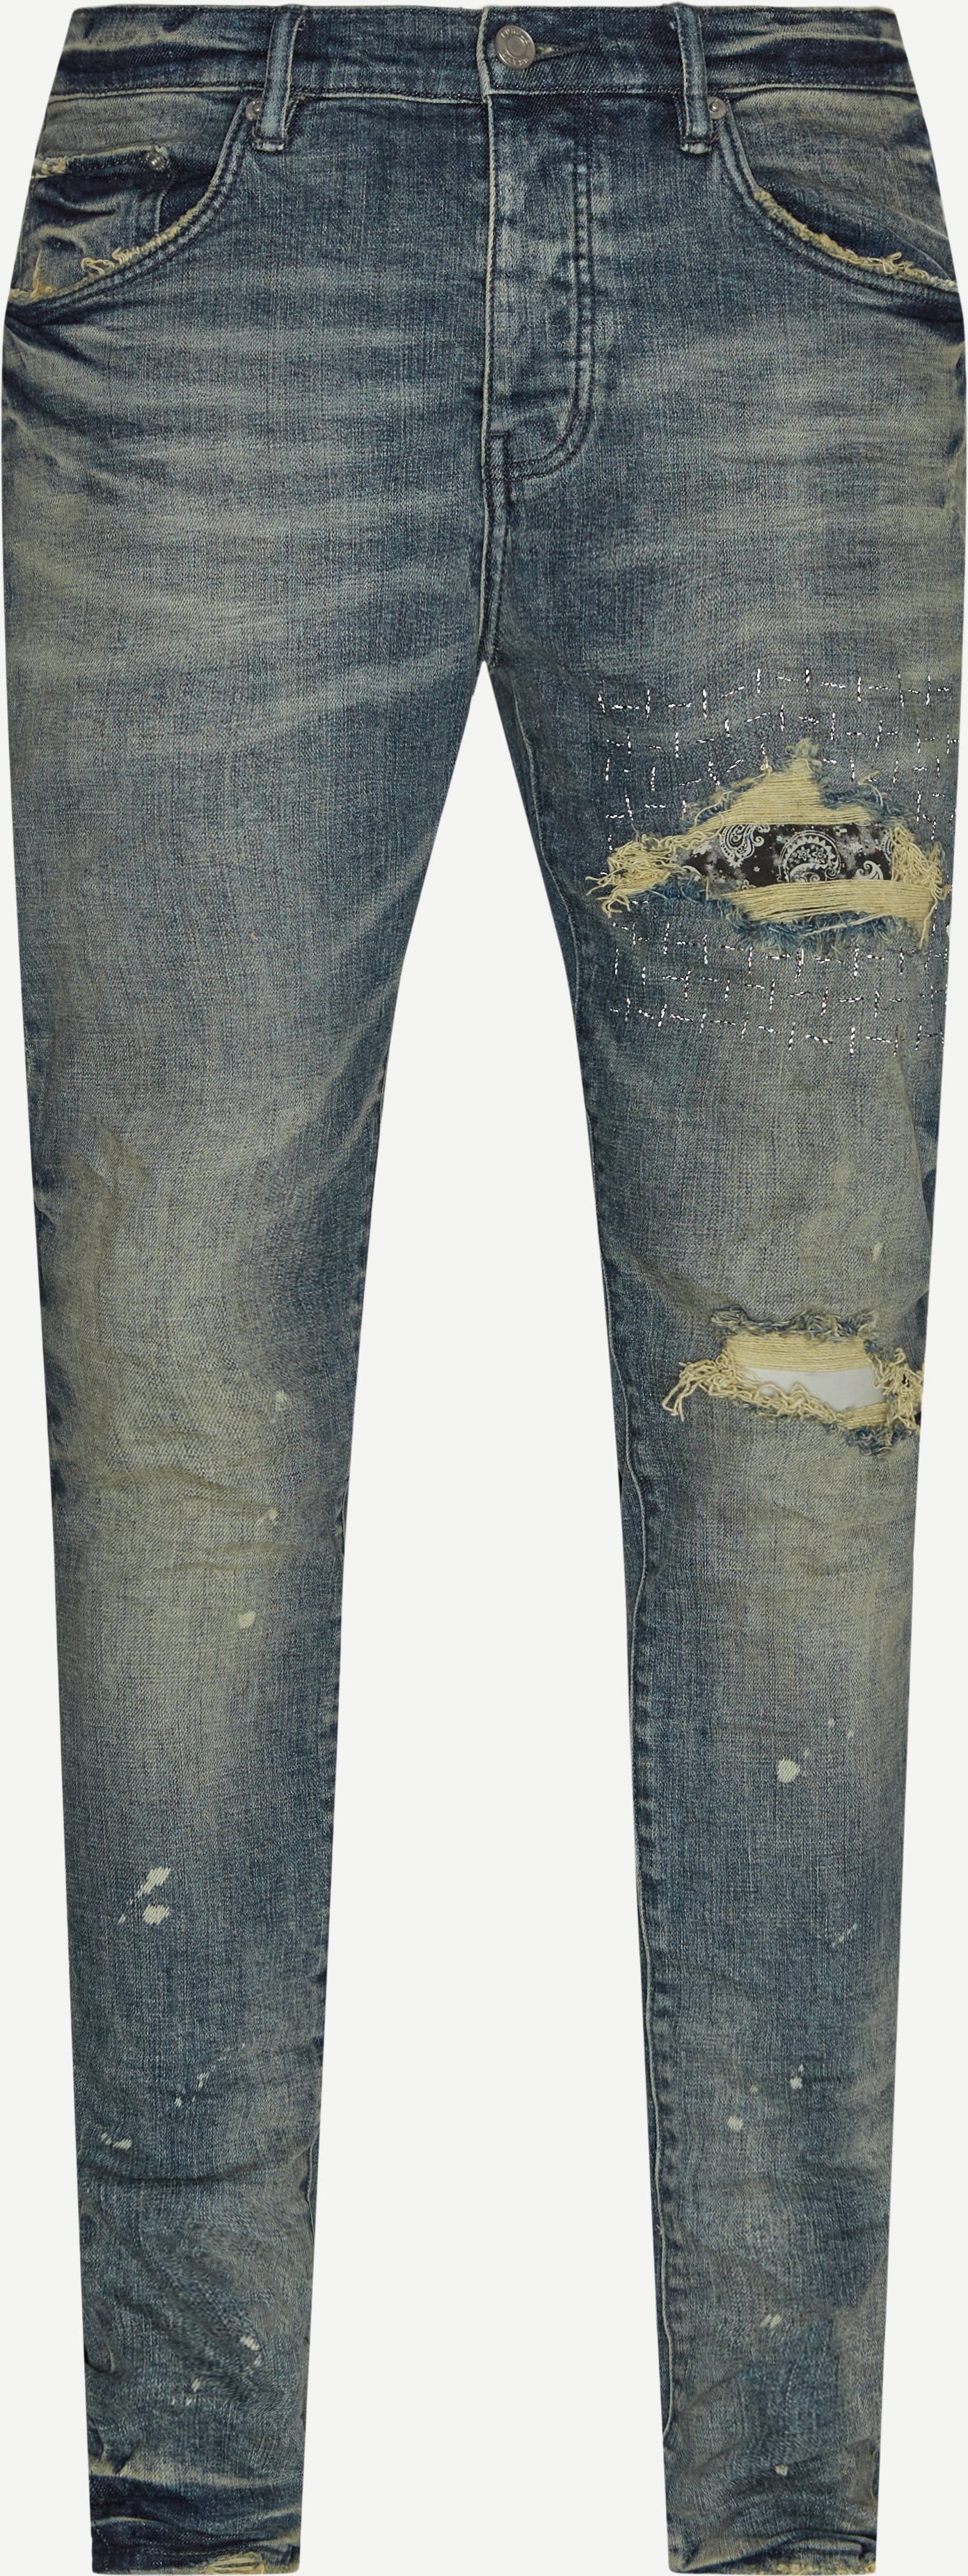 New Print Bandana Patch Jeans - Jeans - Slim fit - Denim